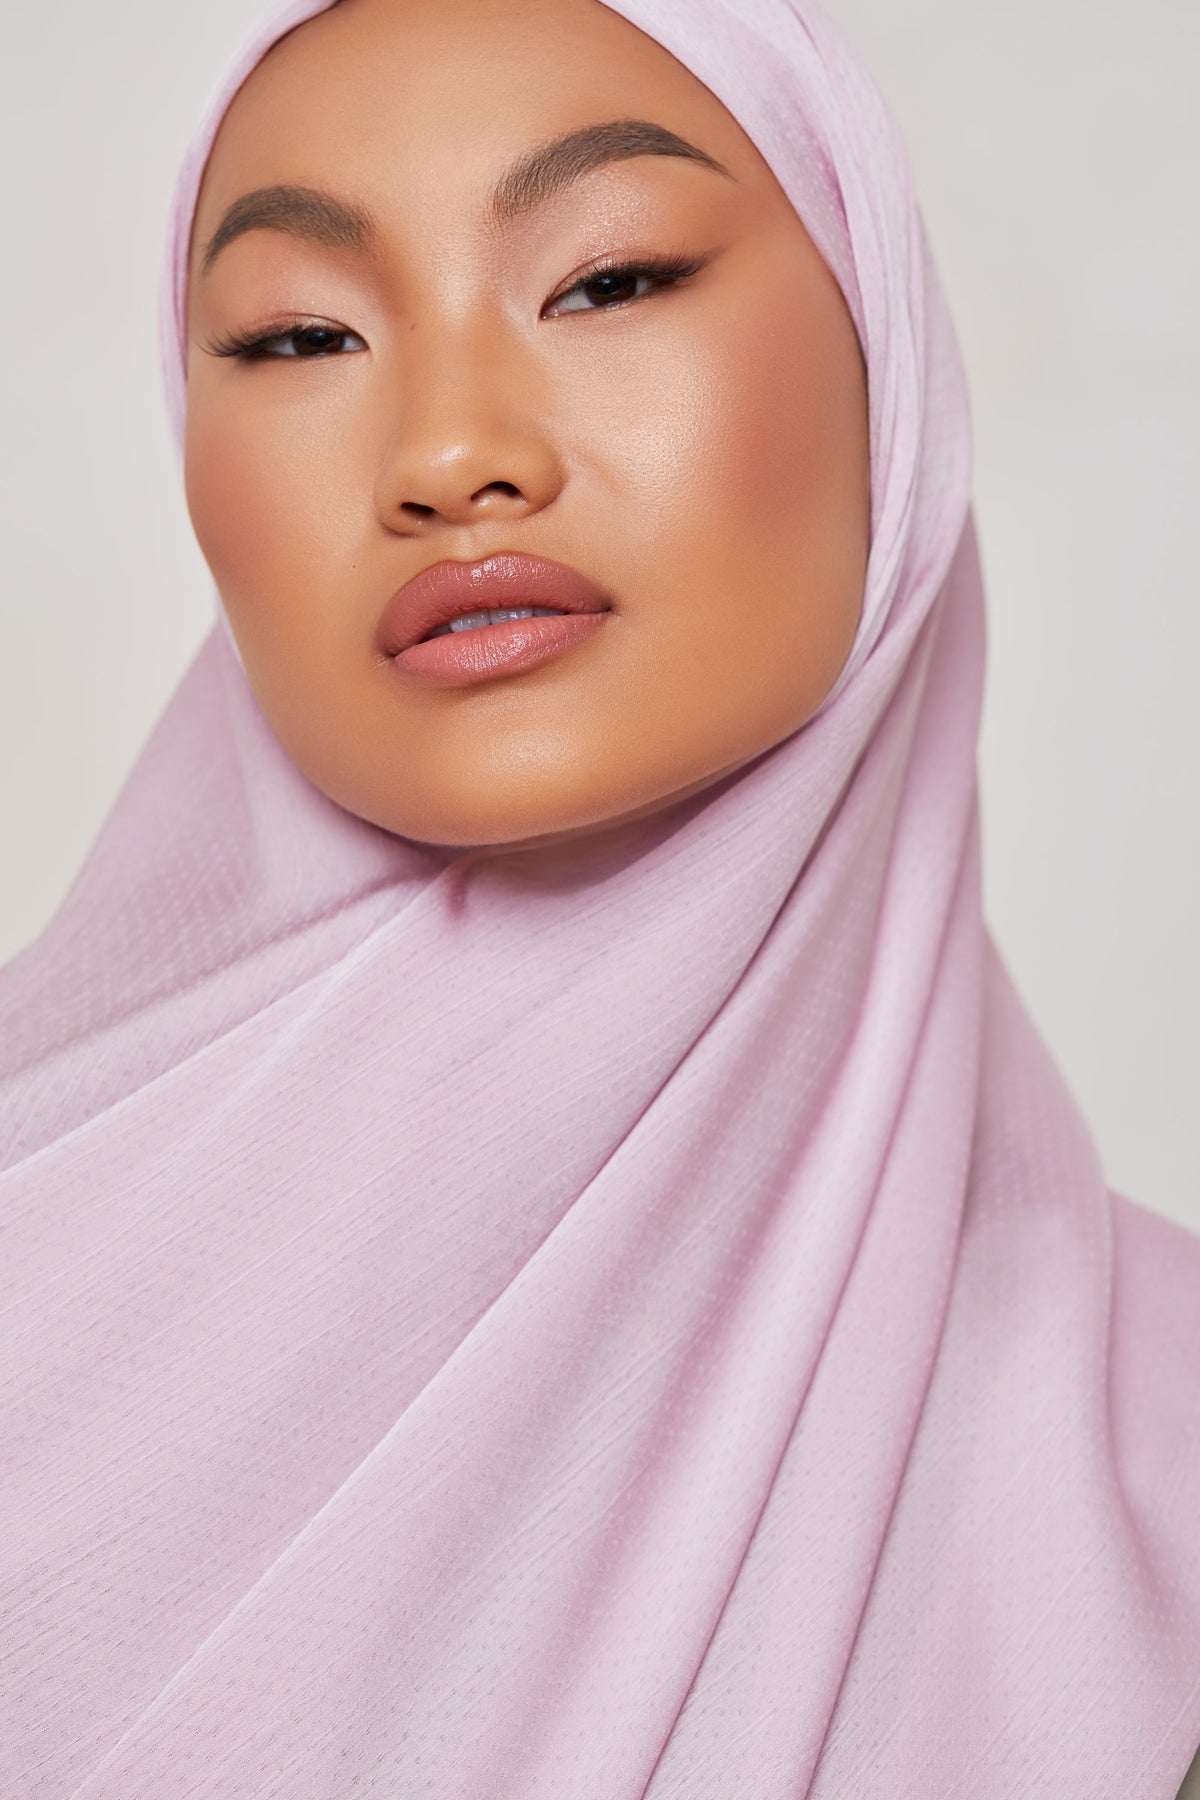 TEXTURE Crepe Hijab - Pink Dots epschoolboard 